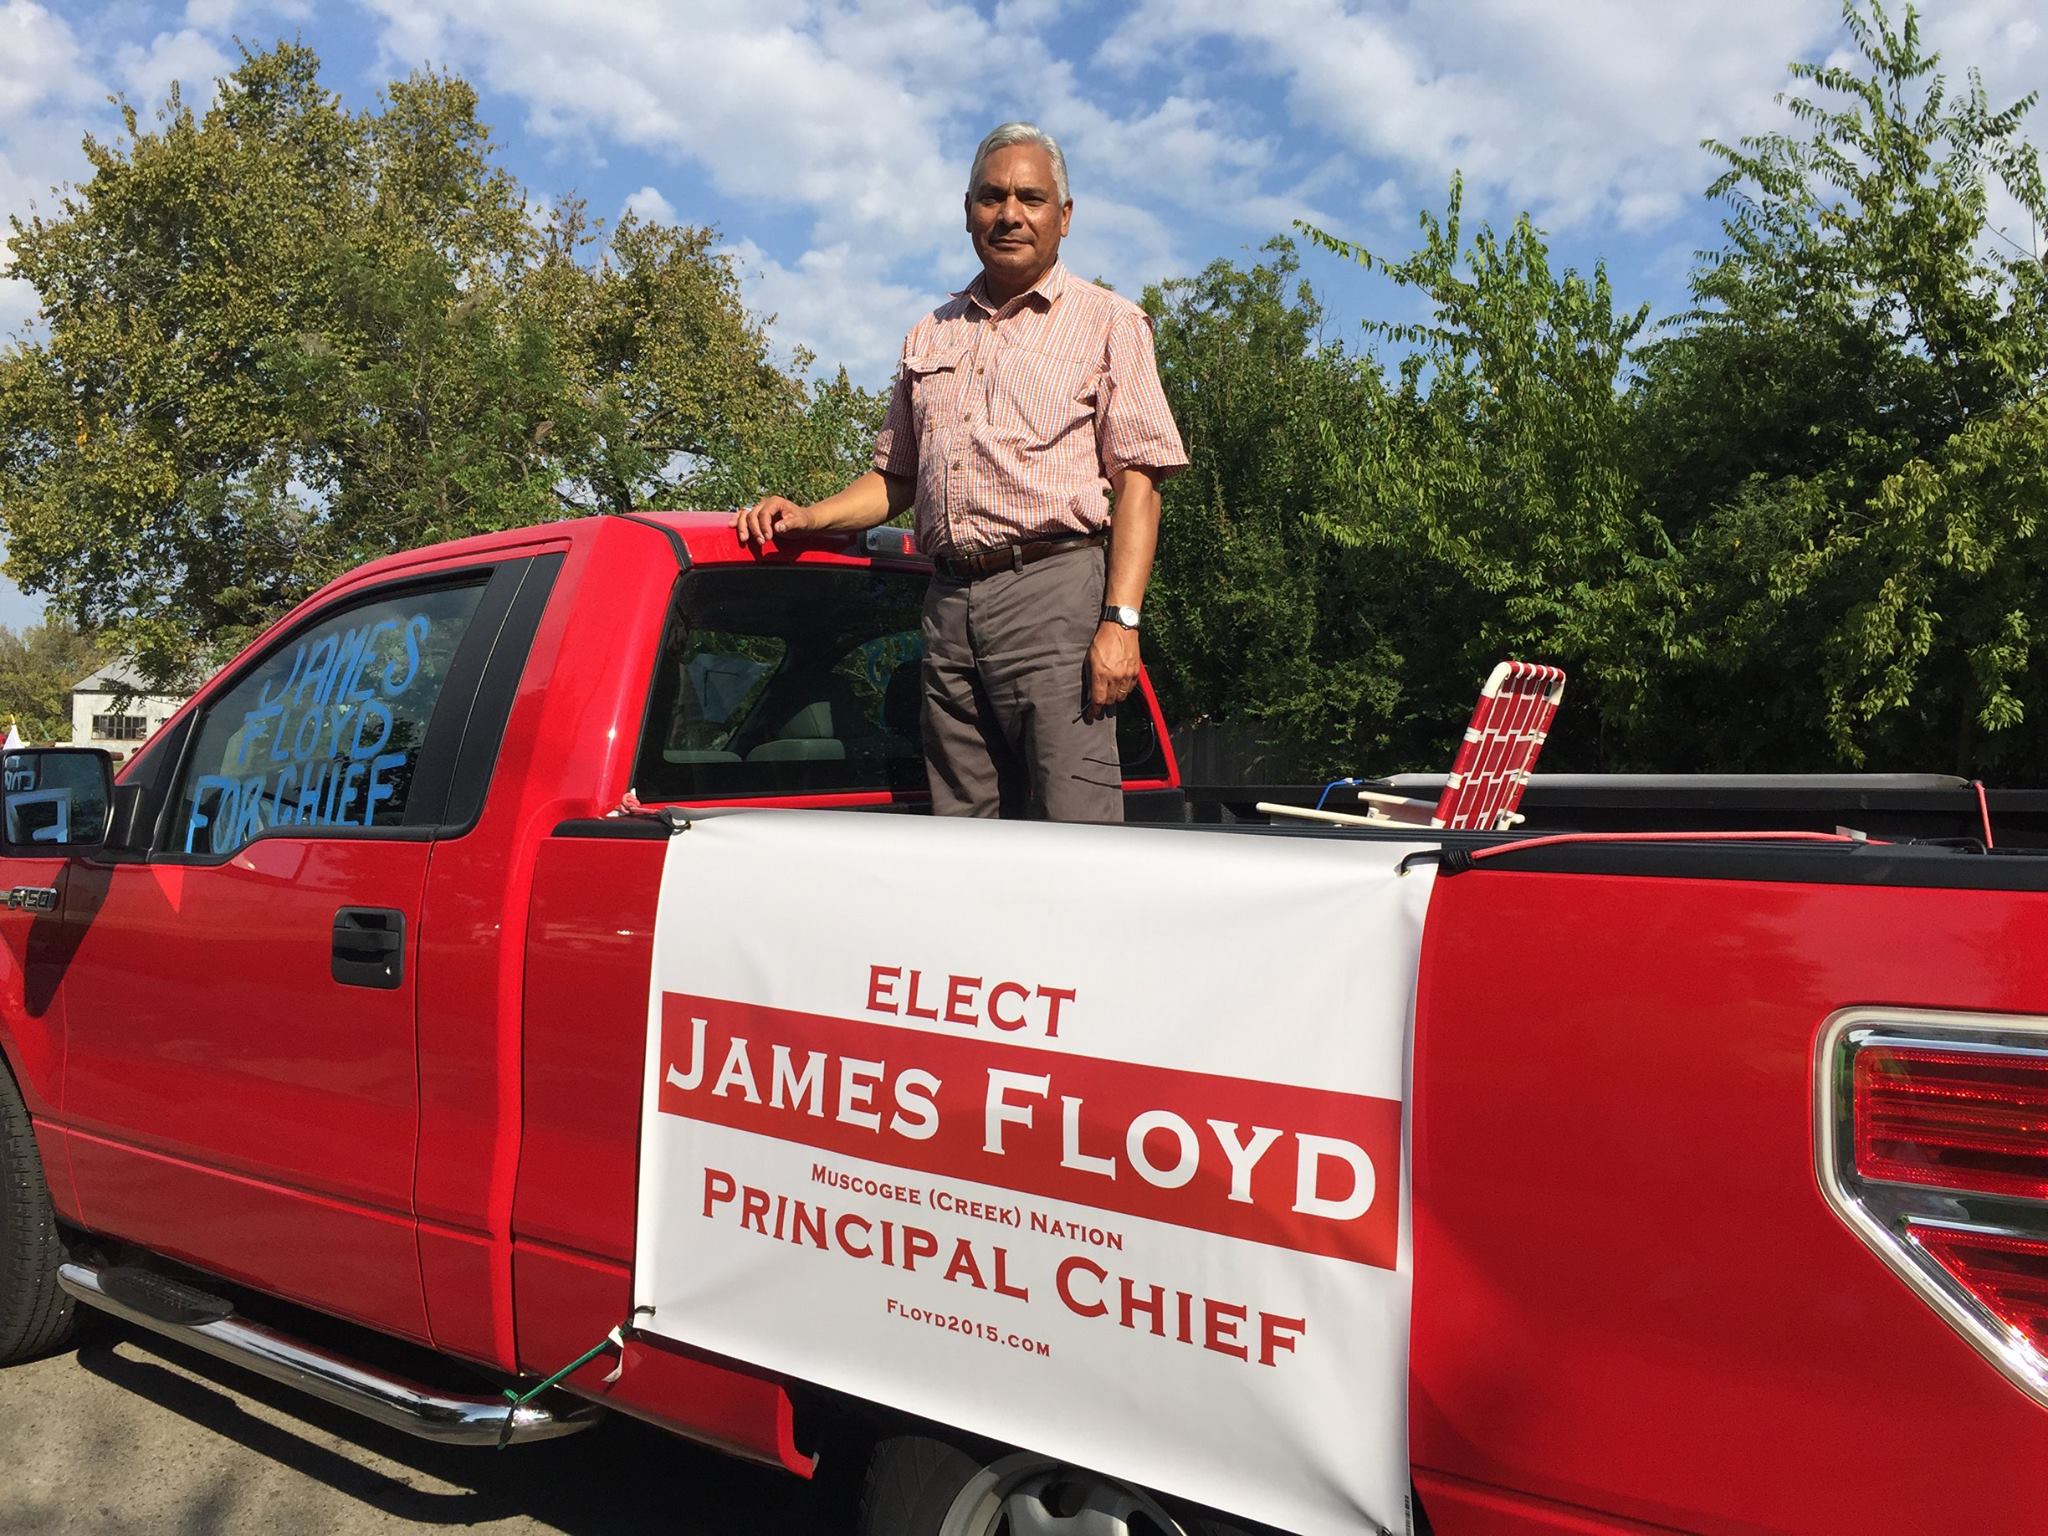 Editorial: Muscogee Nation brings on new leader in James Floyd